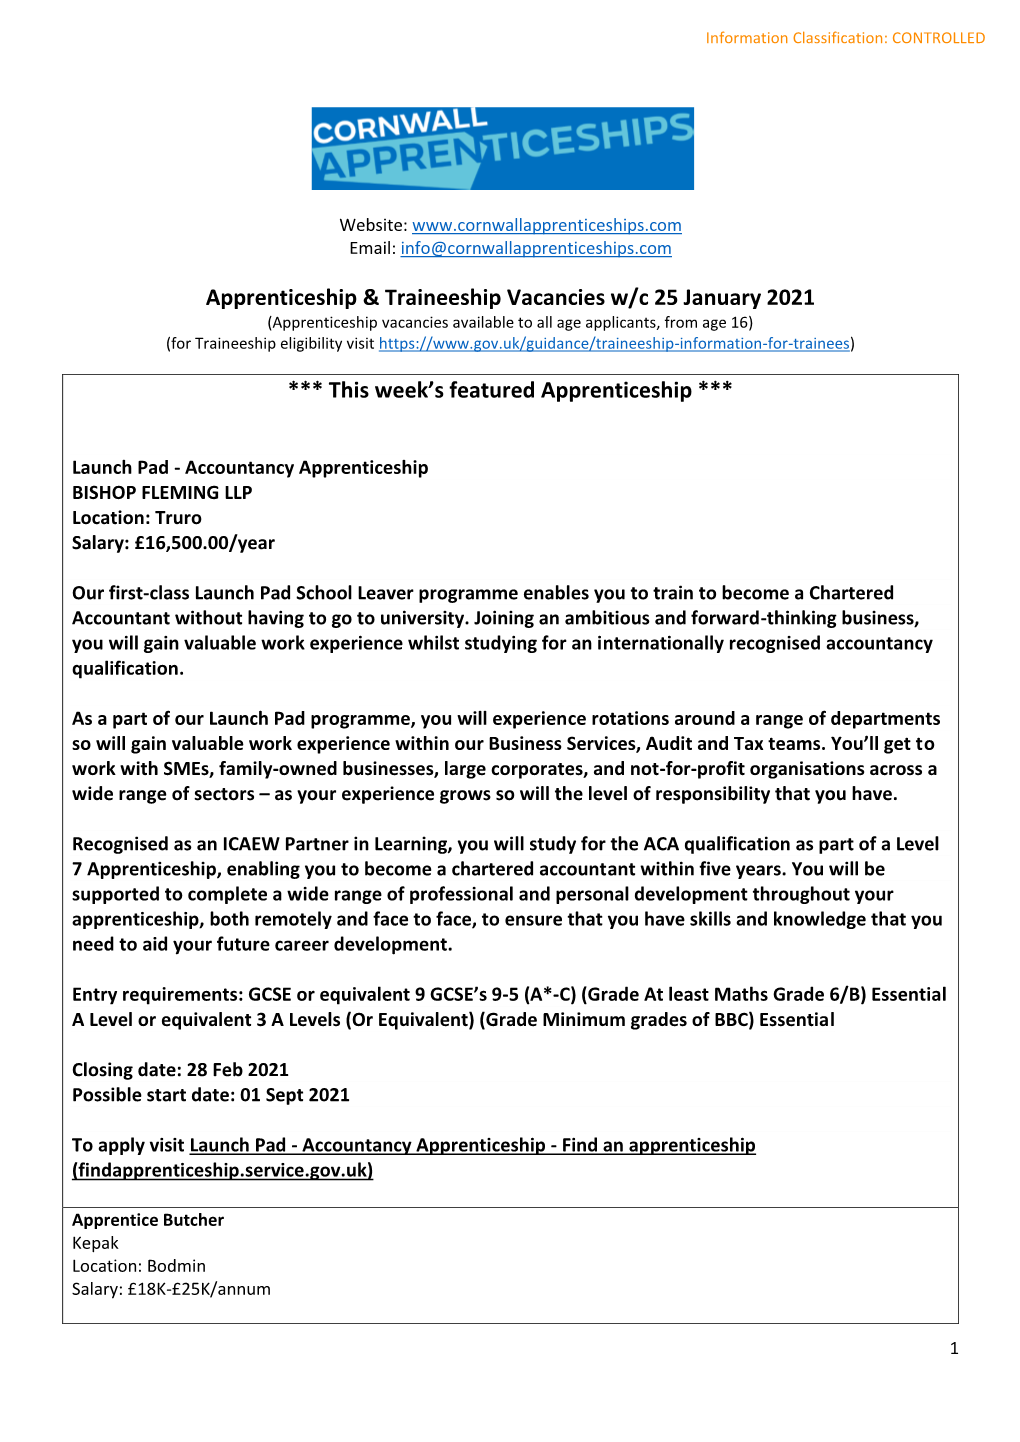 Apprenticeship & Traineeship Vacancies W/C 25 January 2021